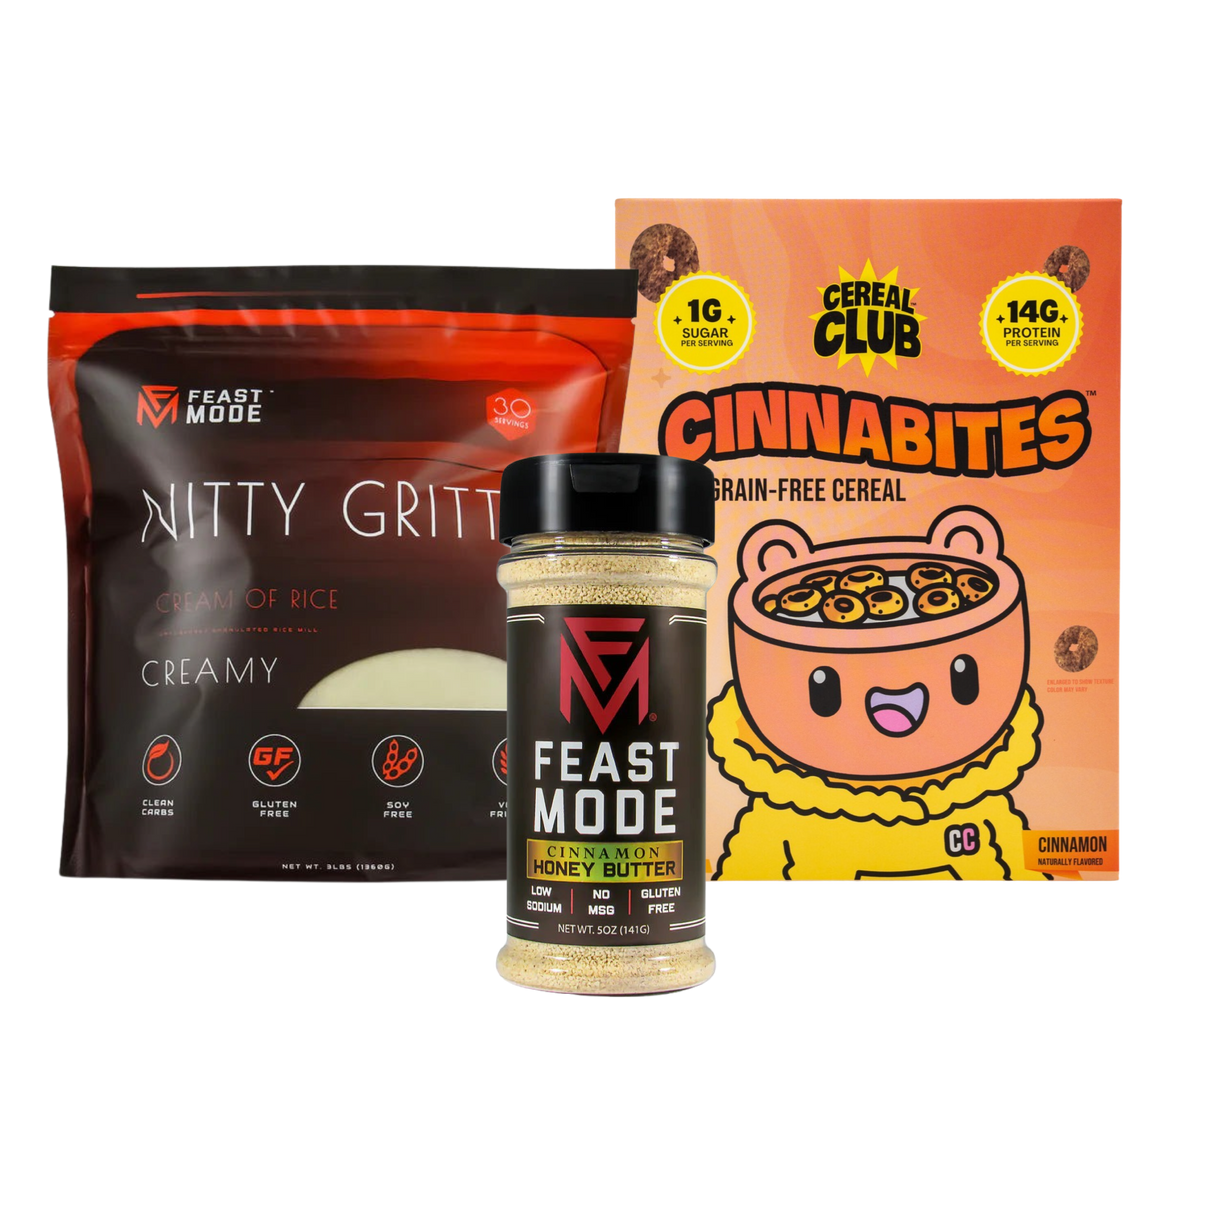 Sweet Peat (Cereal Club + Nitty Gritty + Seasoning)